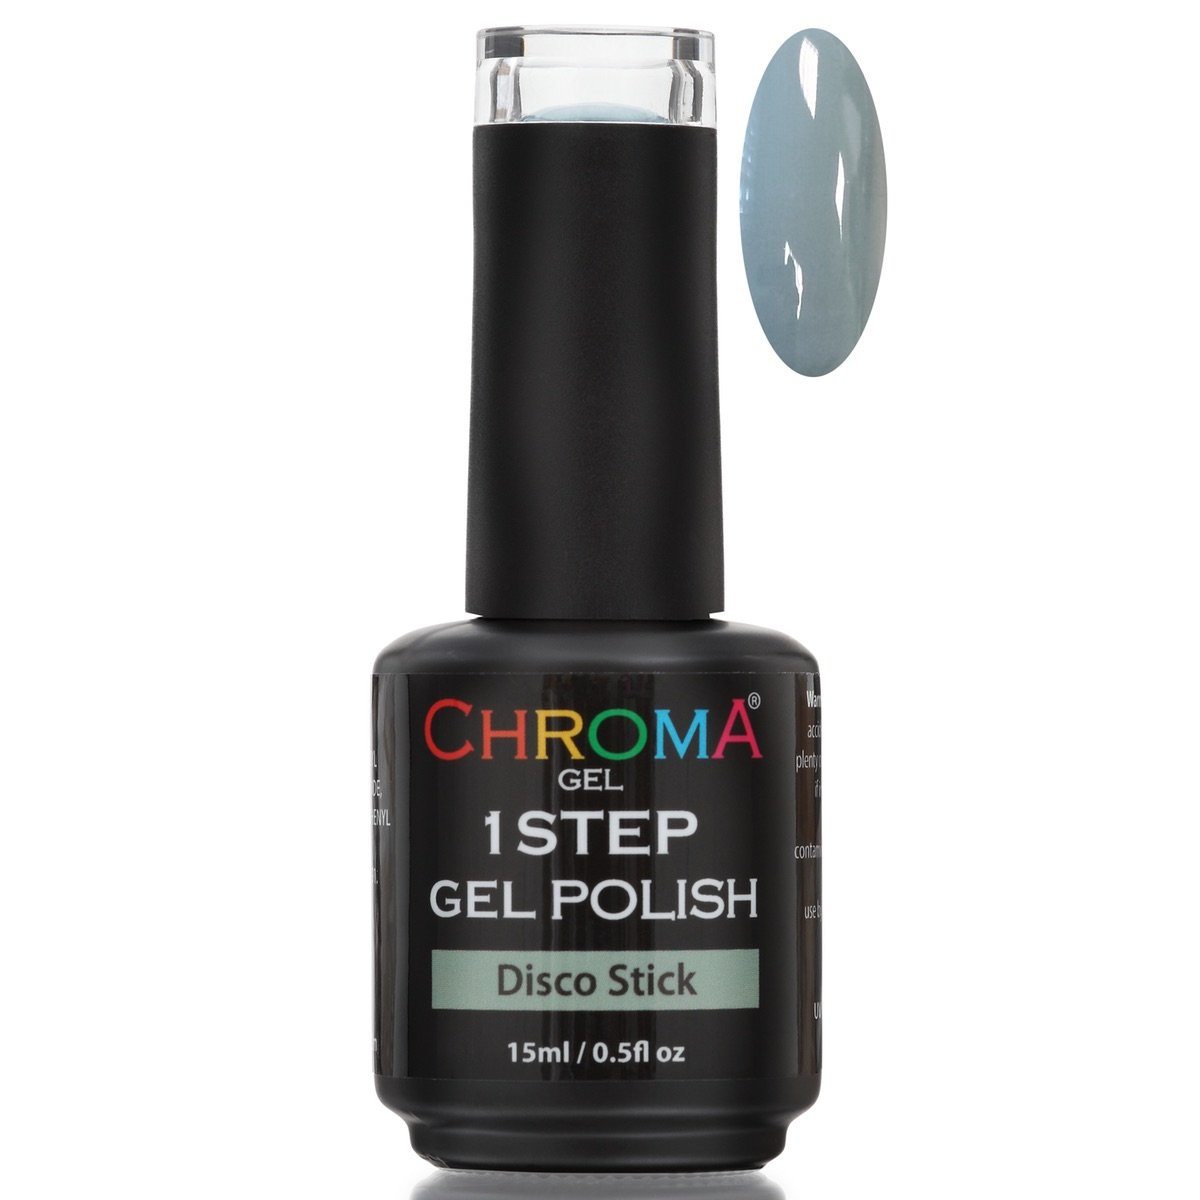 Chroma Gel 1 Step Gel Polish Disco Stick No.28 - Beauty Hair Products LtdChroma Gel